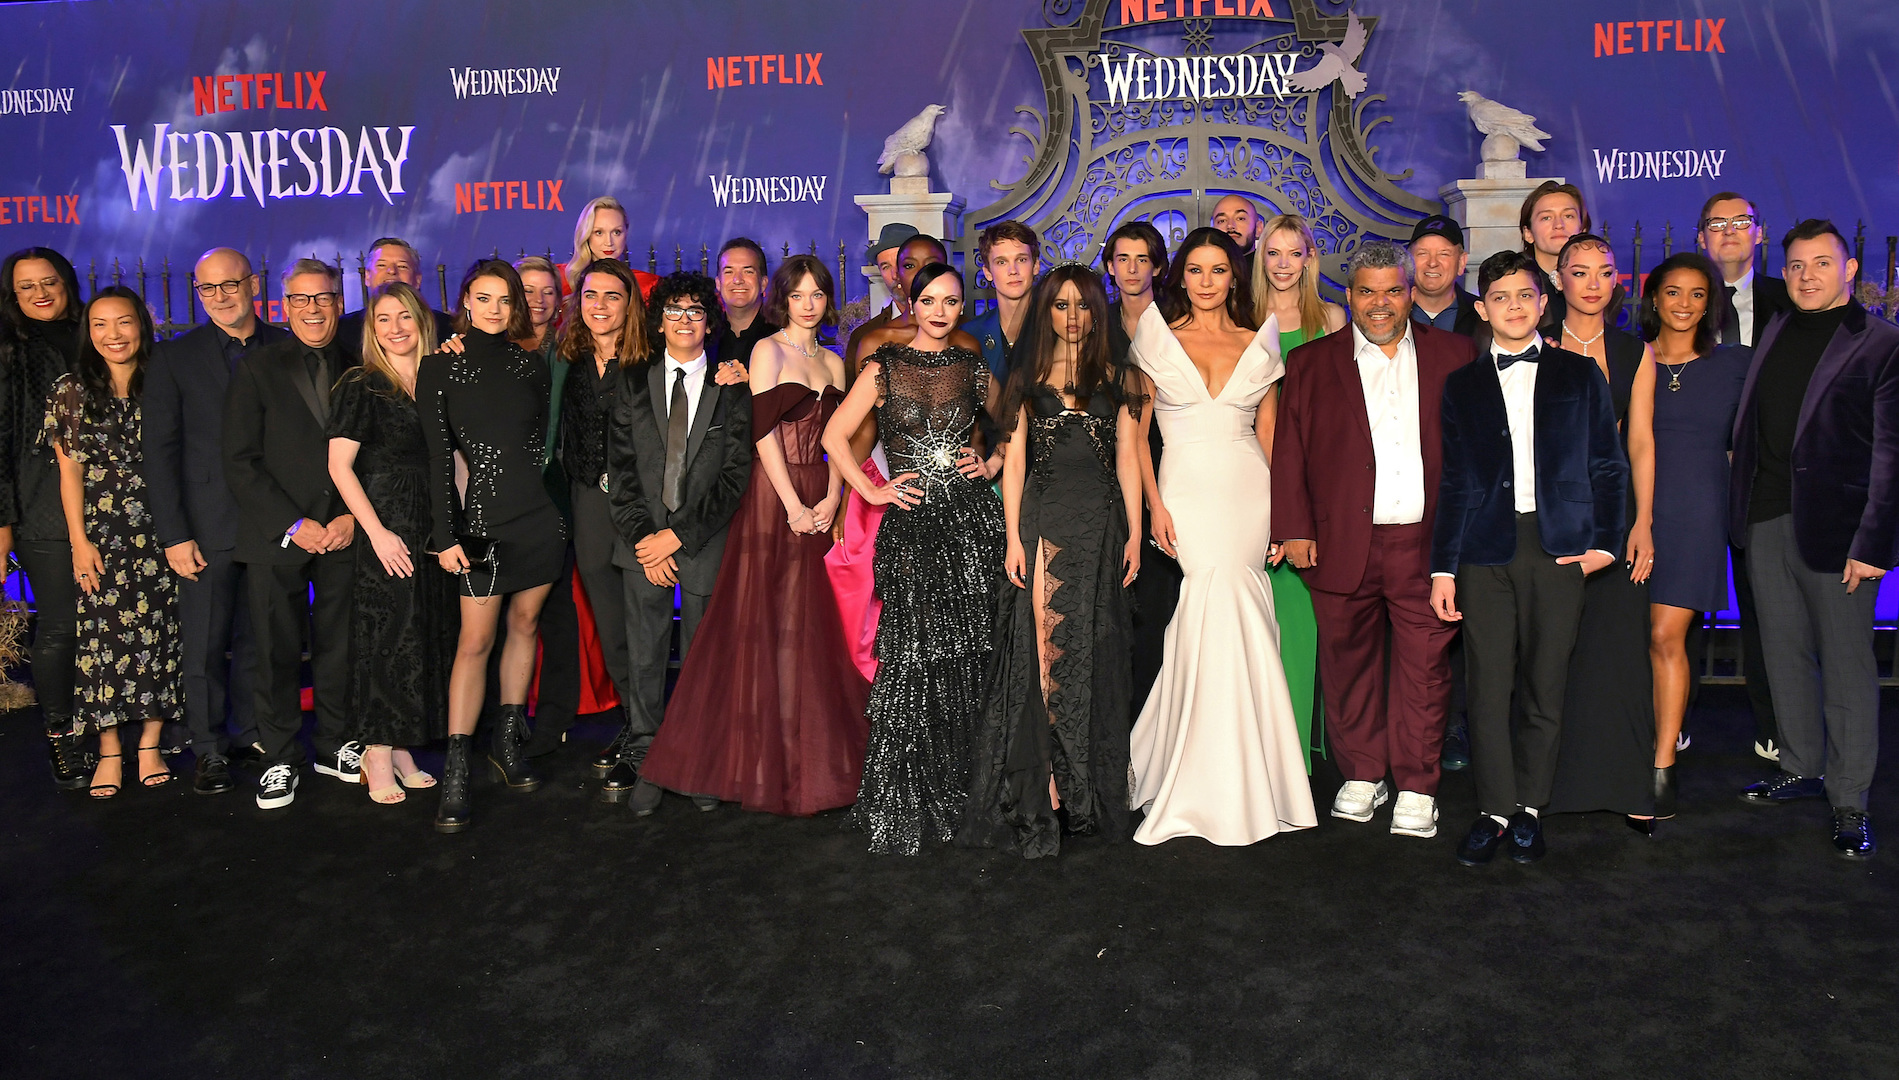 Netflix's 'Wednesday' premiere: Jenna Ortega, Christina Ricci attend